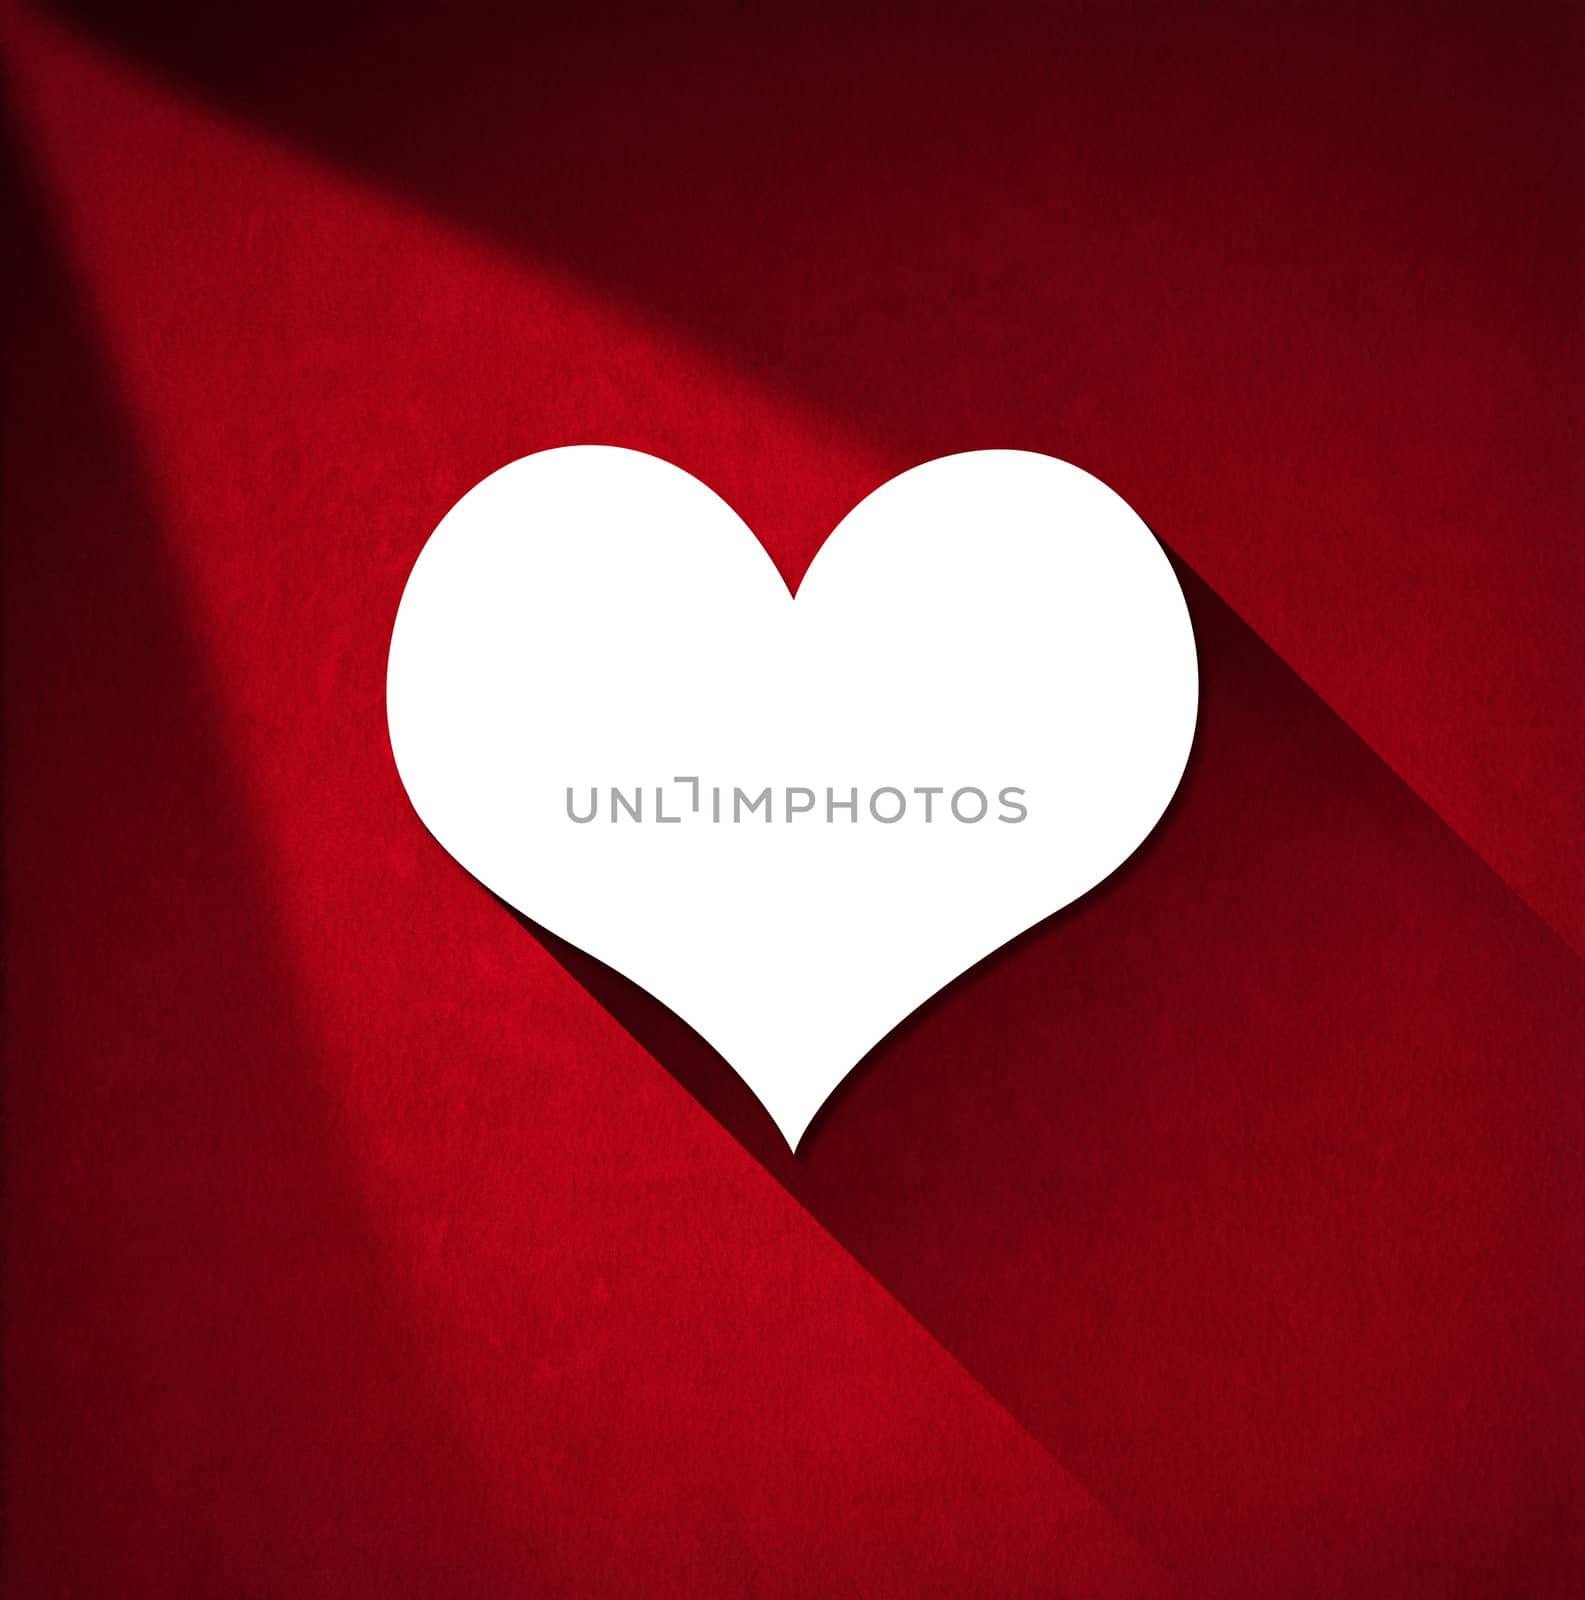 White Paper Heart on Red Velvet Background by catalby